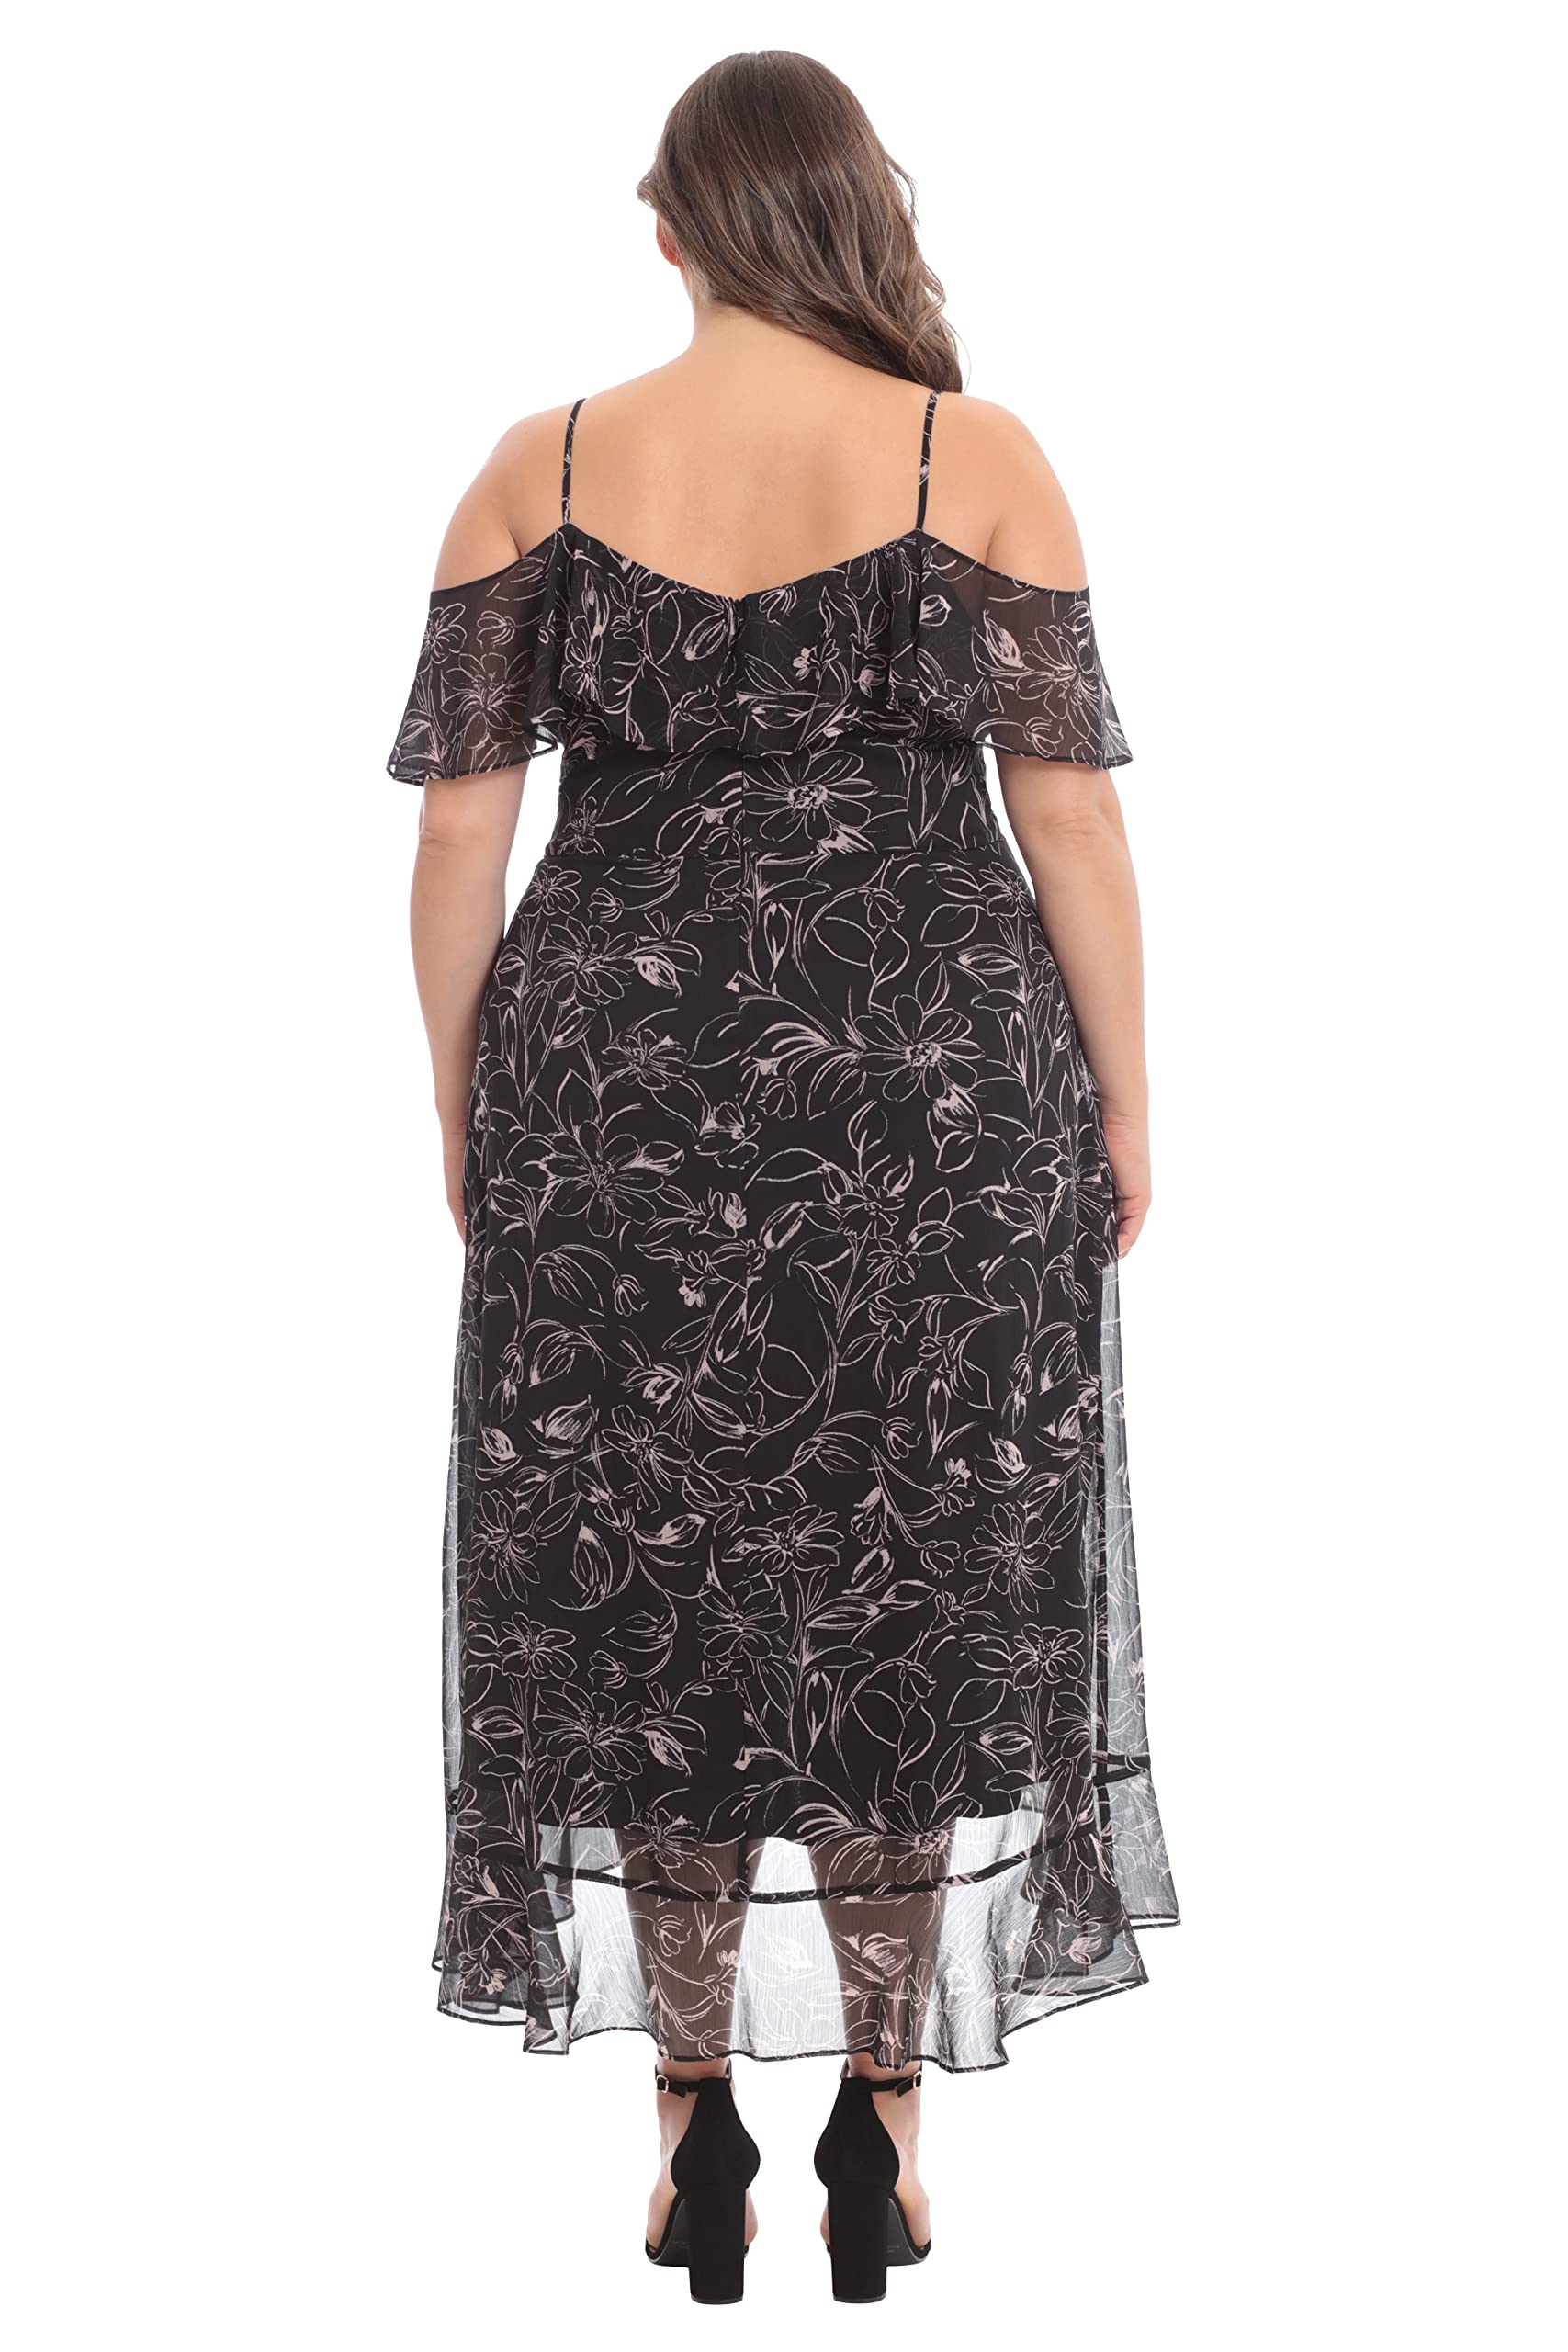 London Times Women's Floral Printed Cold Shoulder Faux Wrap Hi-Low Maxi Dress with Ruffle Details